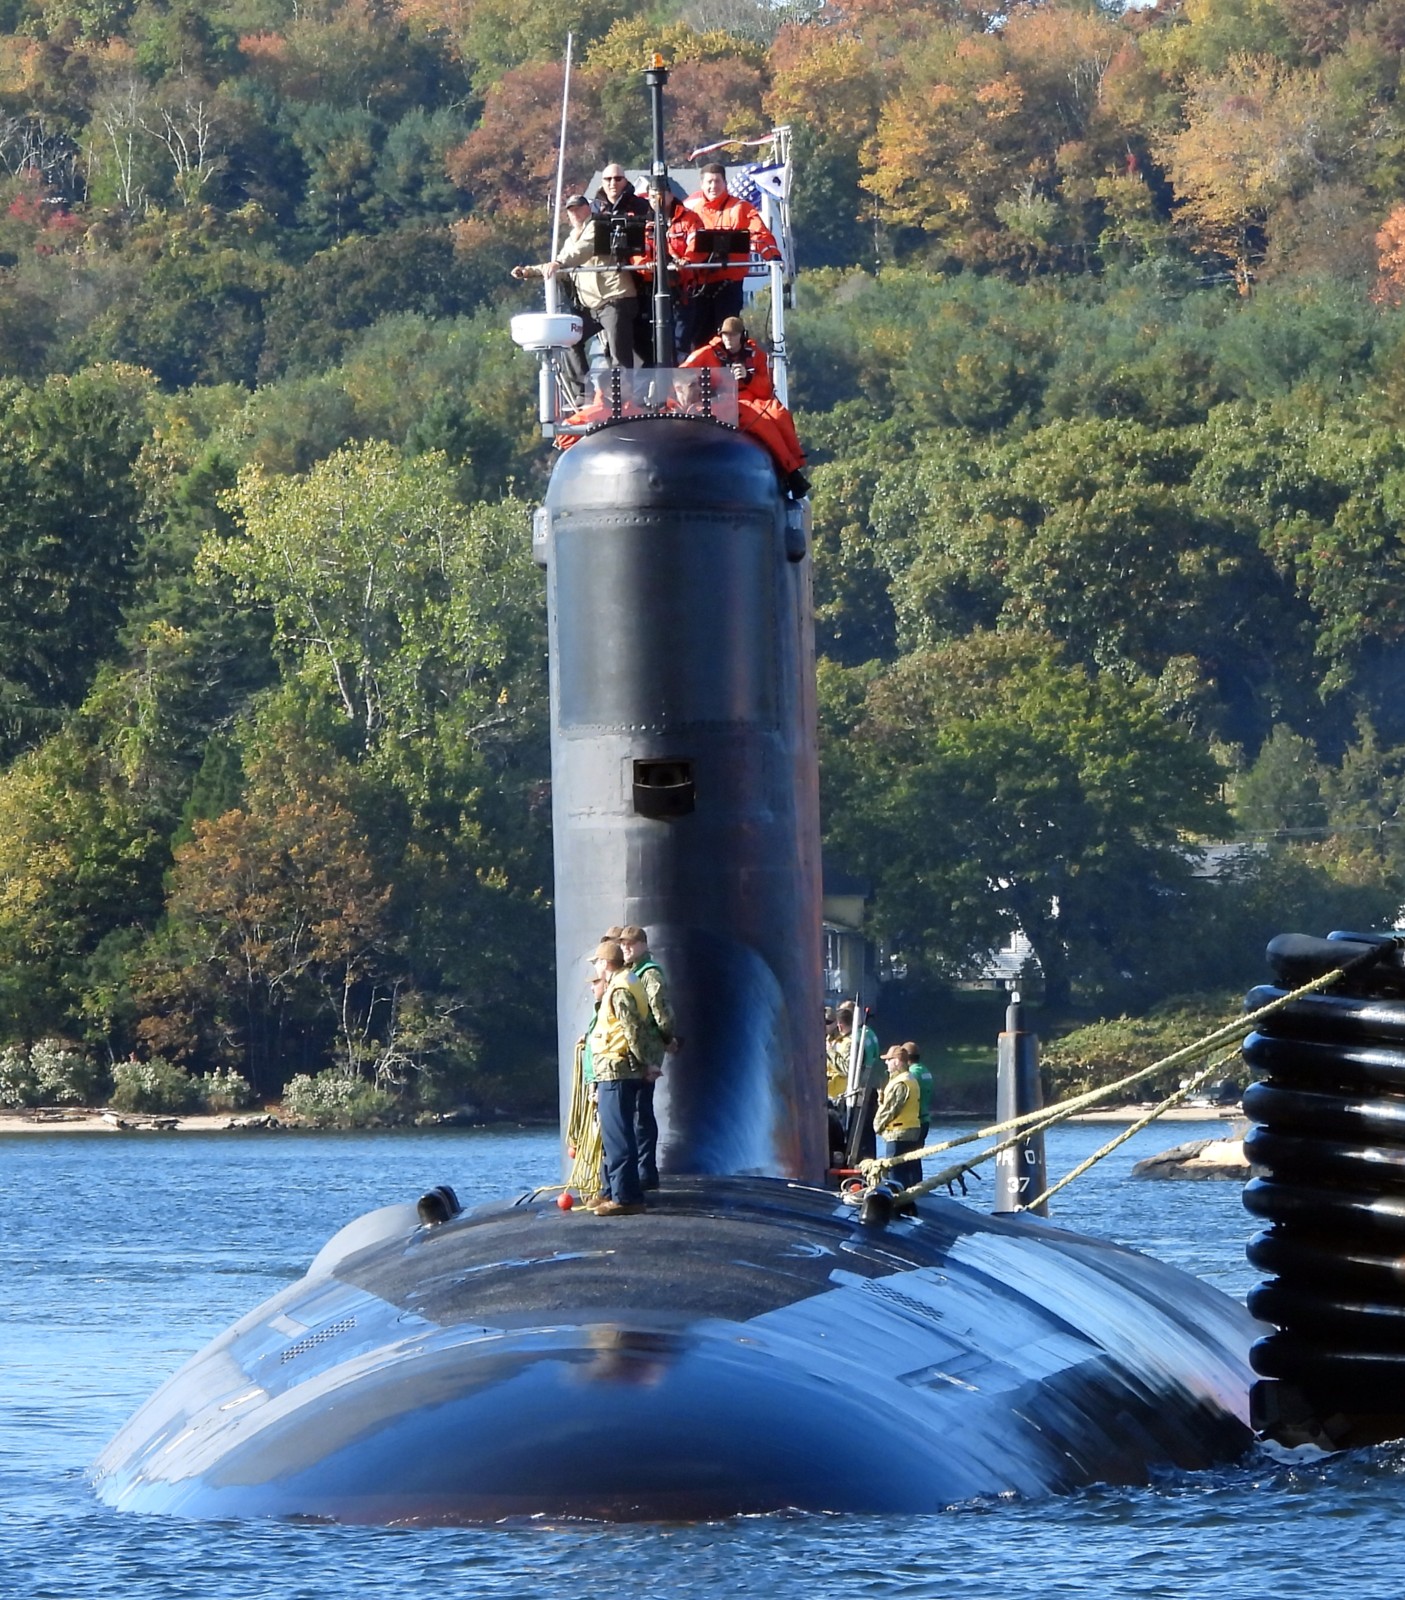 ssn-793 uss oregon virginia class attack submarine block iv us navy returning subase new london groton 16